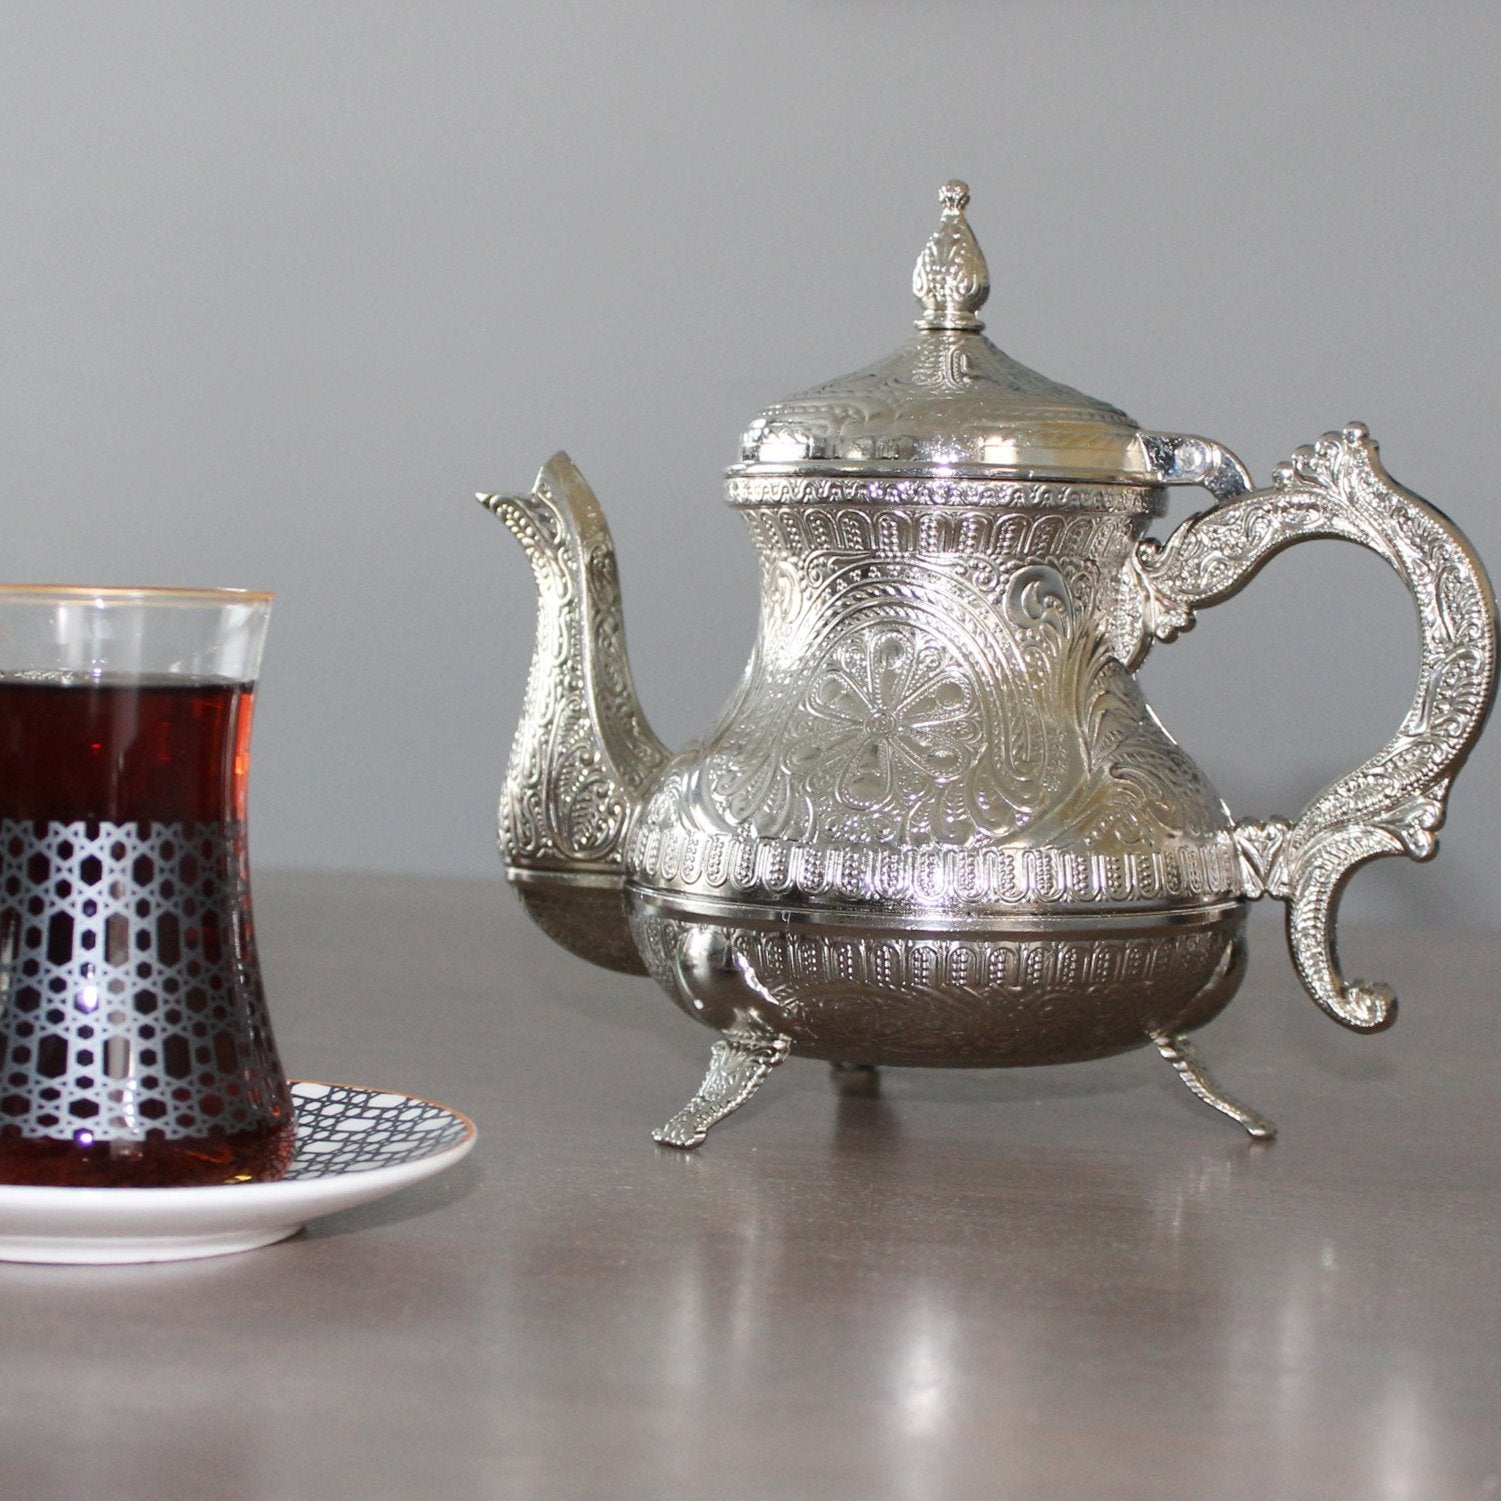 Vintage Turkish Tea Set with Tray Metal Teapot Set